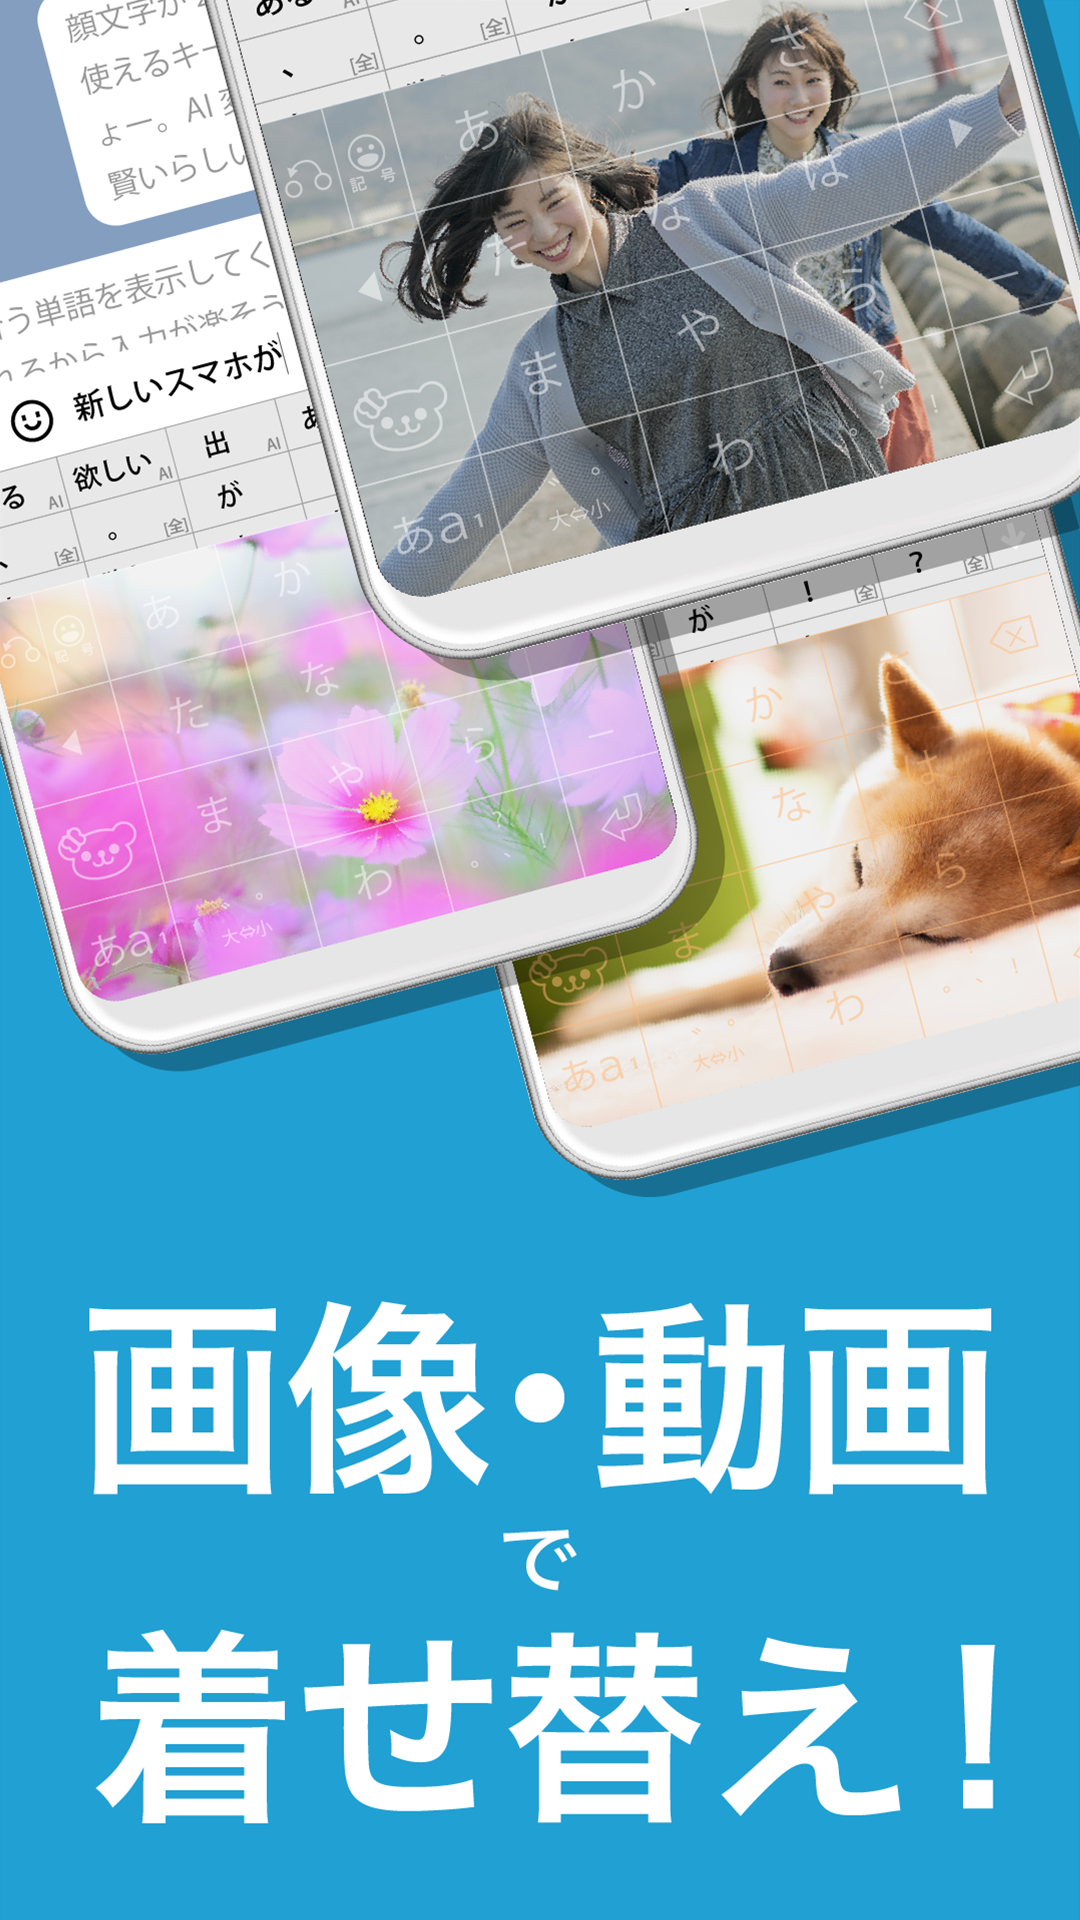 Android application flick - Emoticon Keyboard screenshort